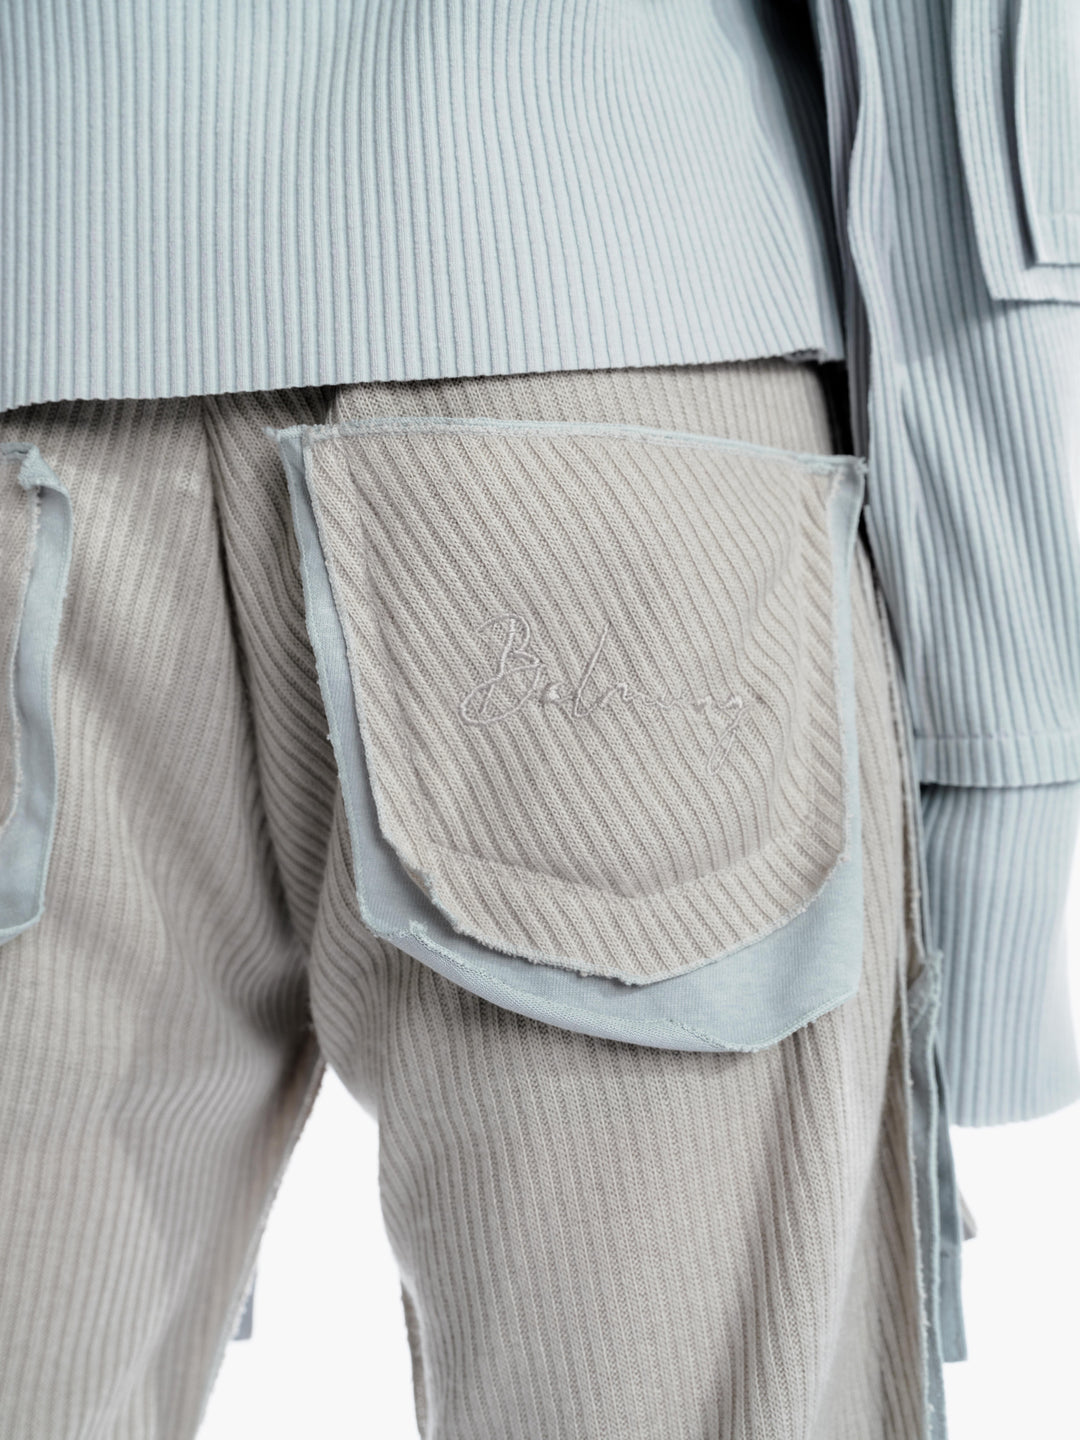 Double slit pants (knit) - Gray